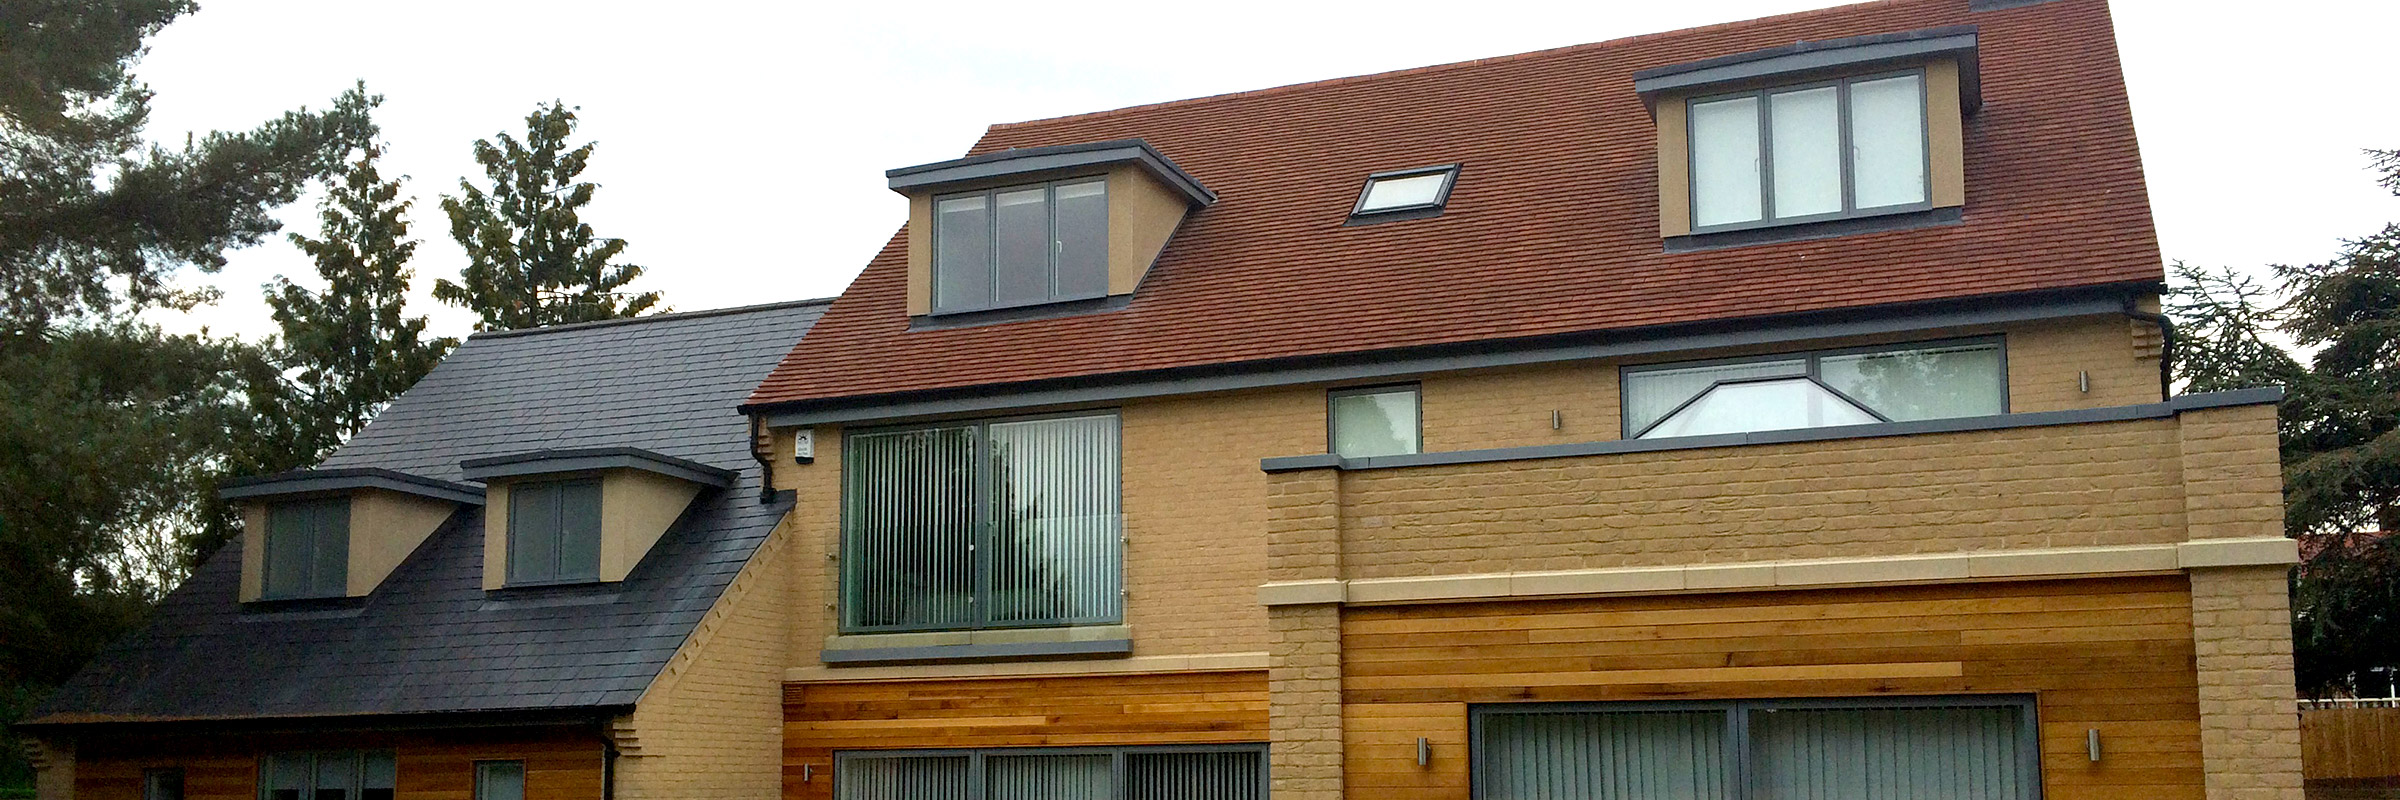 Paul Nunn Roofing Ltd-Roofing Services-Roof Repairs-Bury St Edmunds-Ipswich-Newmarket-Cambridge-Suffolk-Cambridgeshire